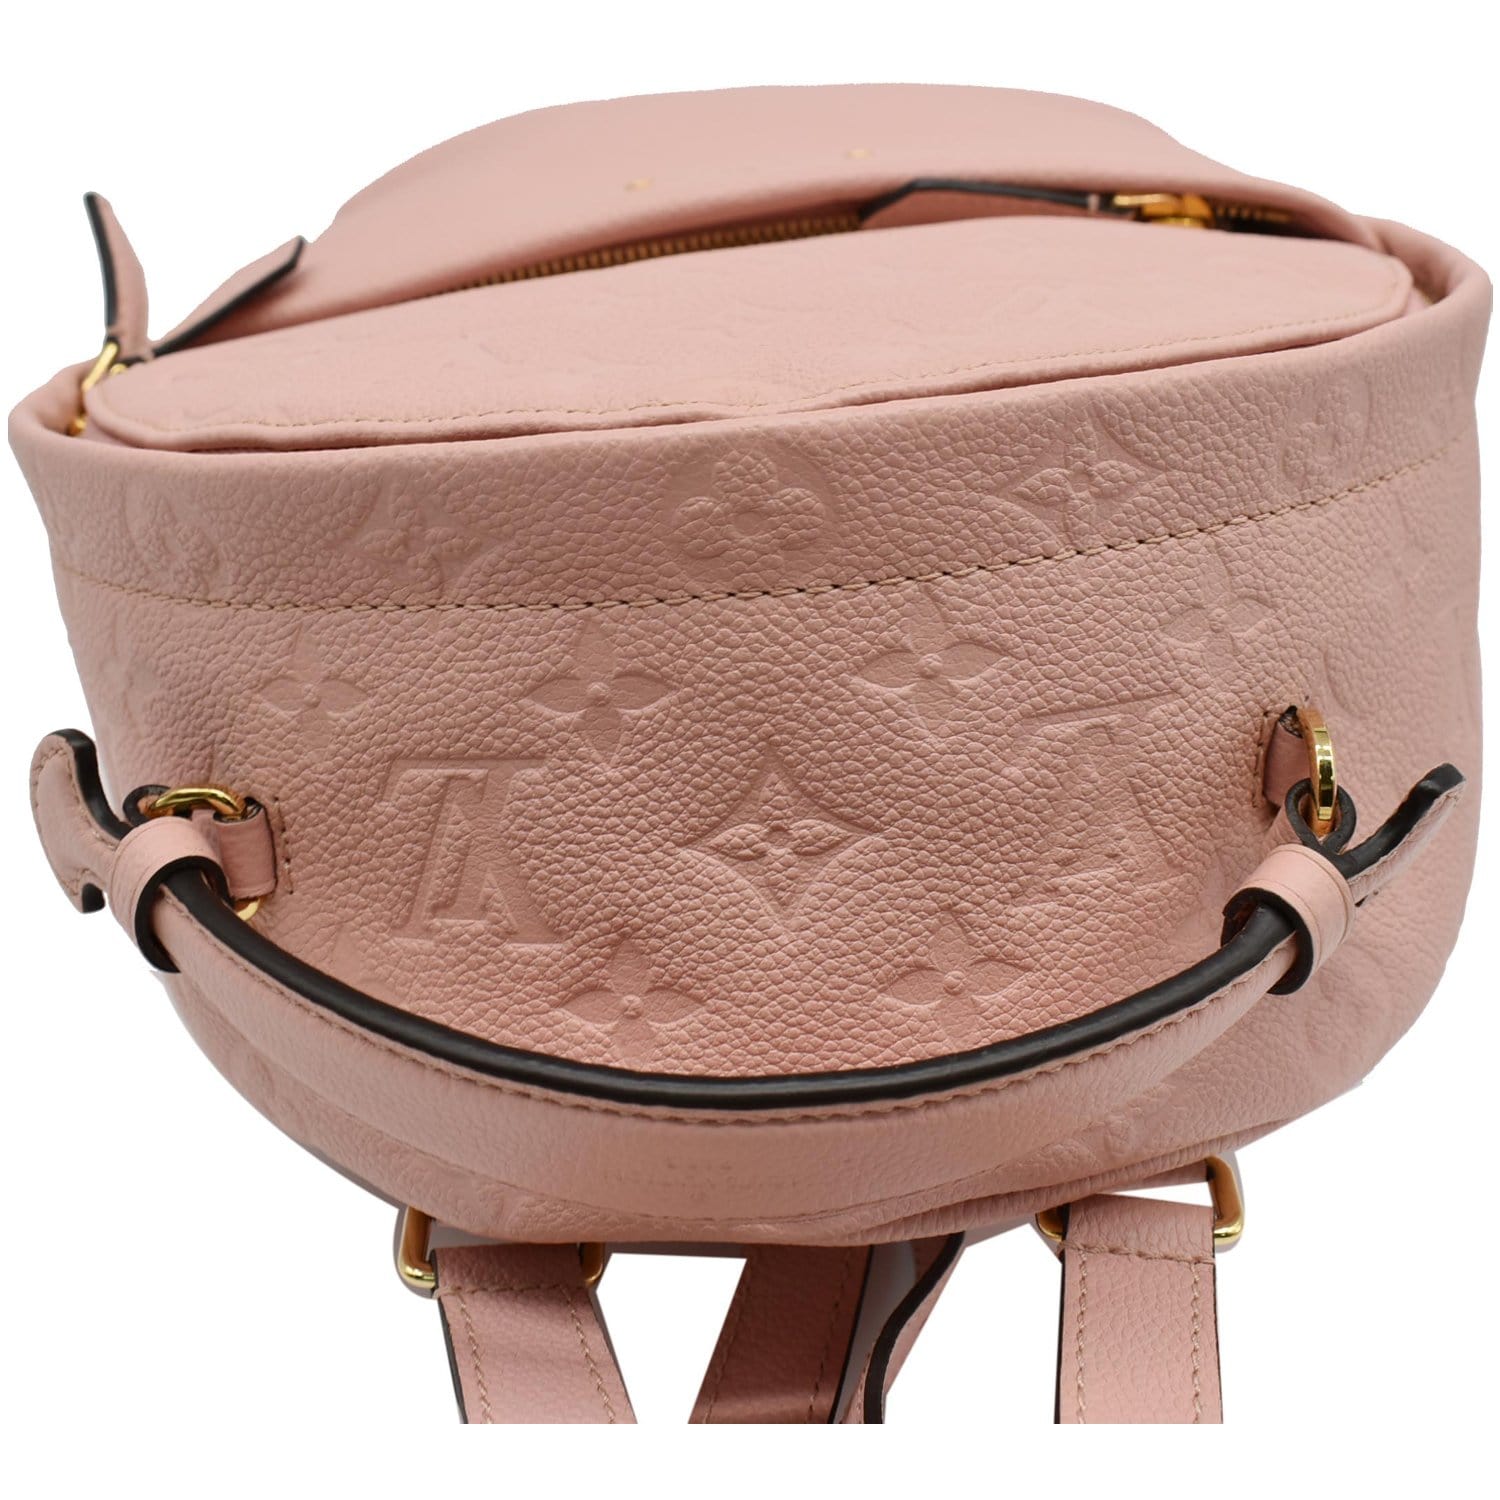 Louis Vuitton lv Sorbonne woman backpack pink 1:1